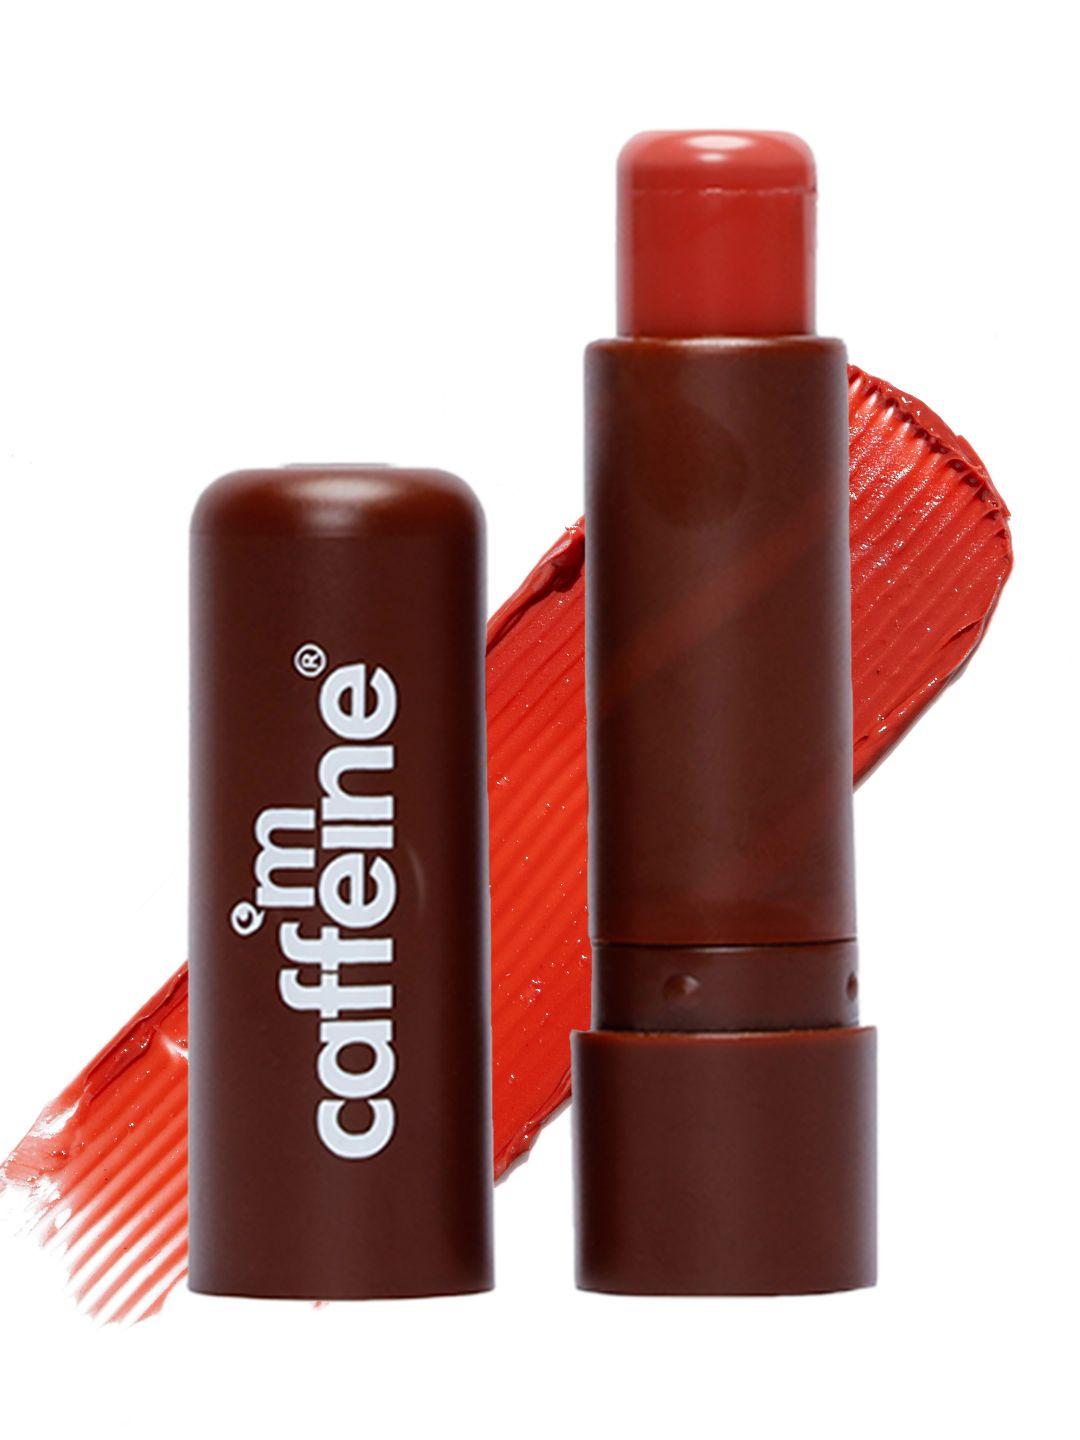 mcaffeine choco tinted lip balm with berriese - 4.5g